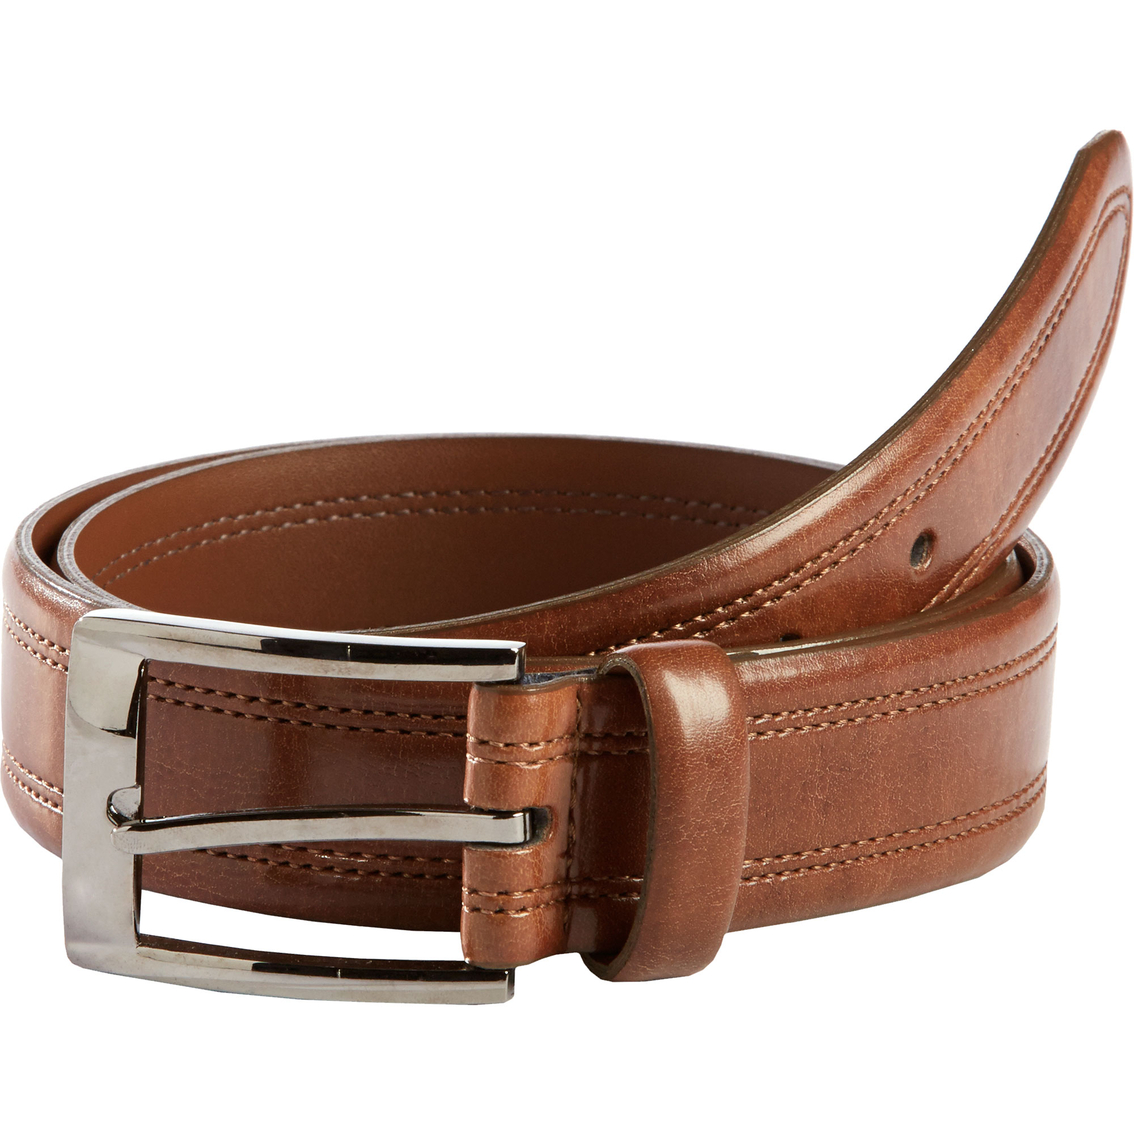 Izod Belt | Belts & Belt Buckles | Clothing & Accessories | Shop The ...